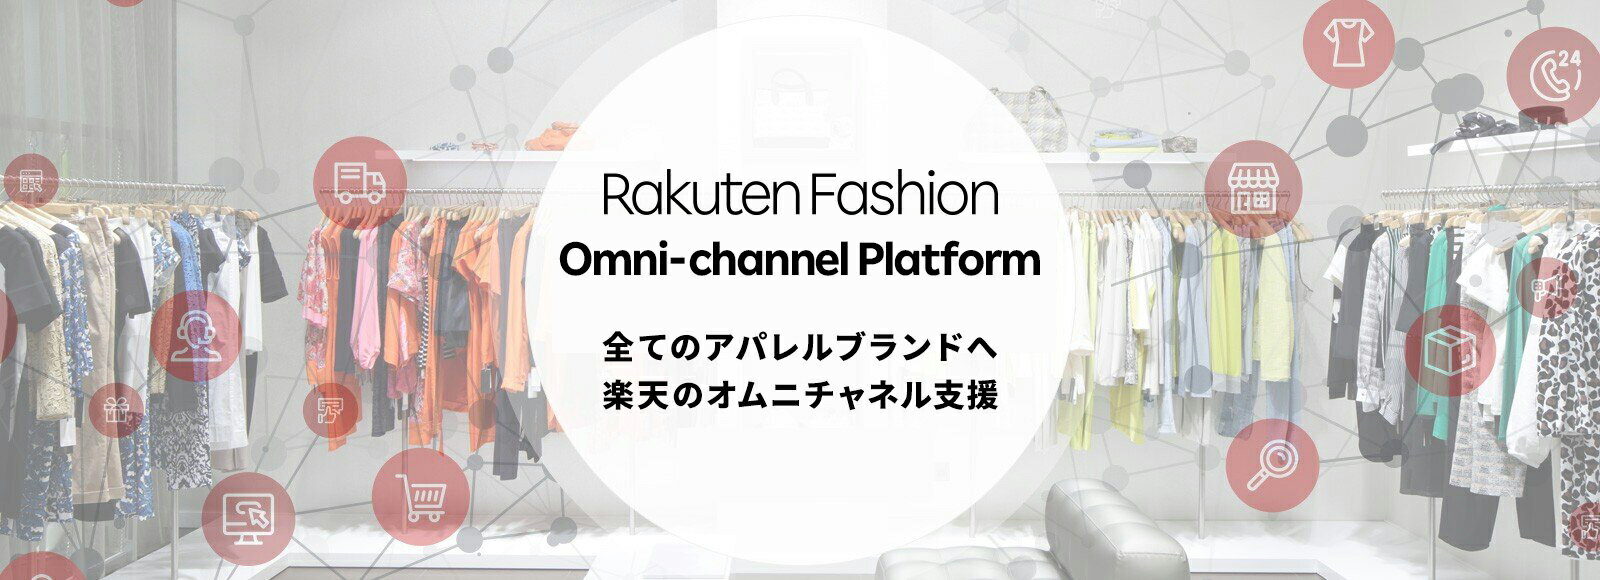 Rakuten Fashion Omni-channel Platform